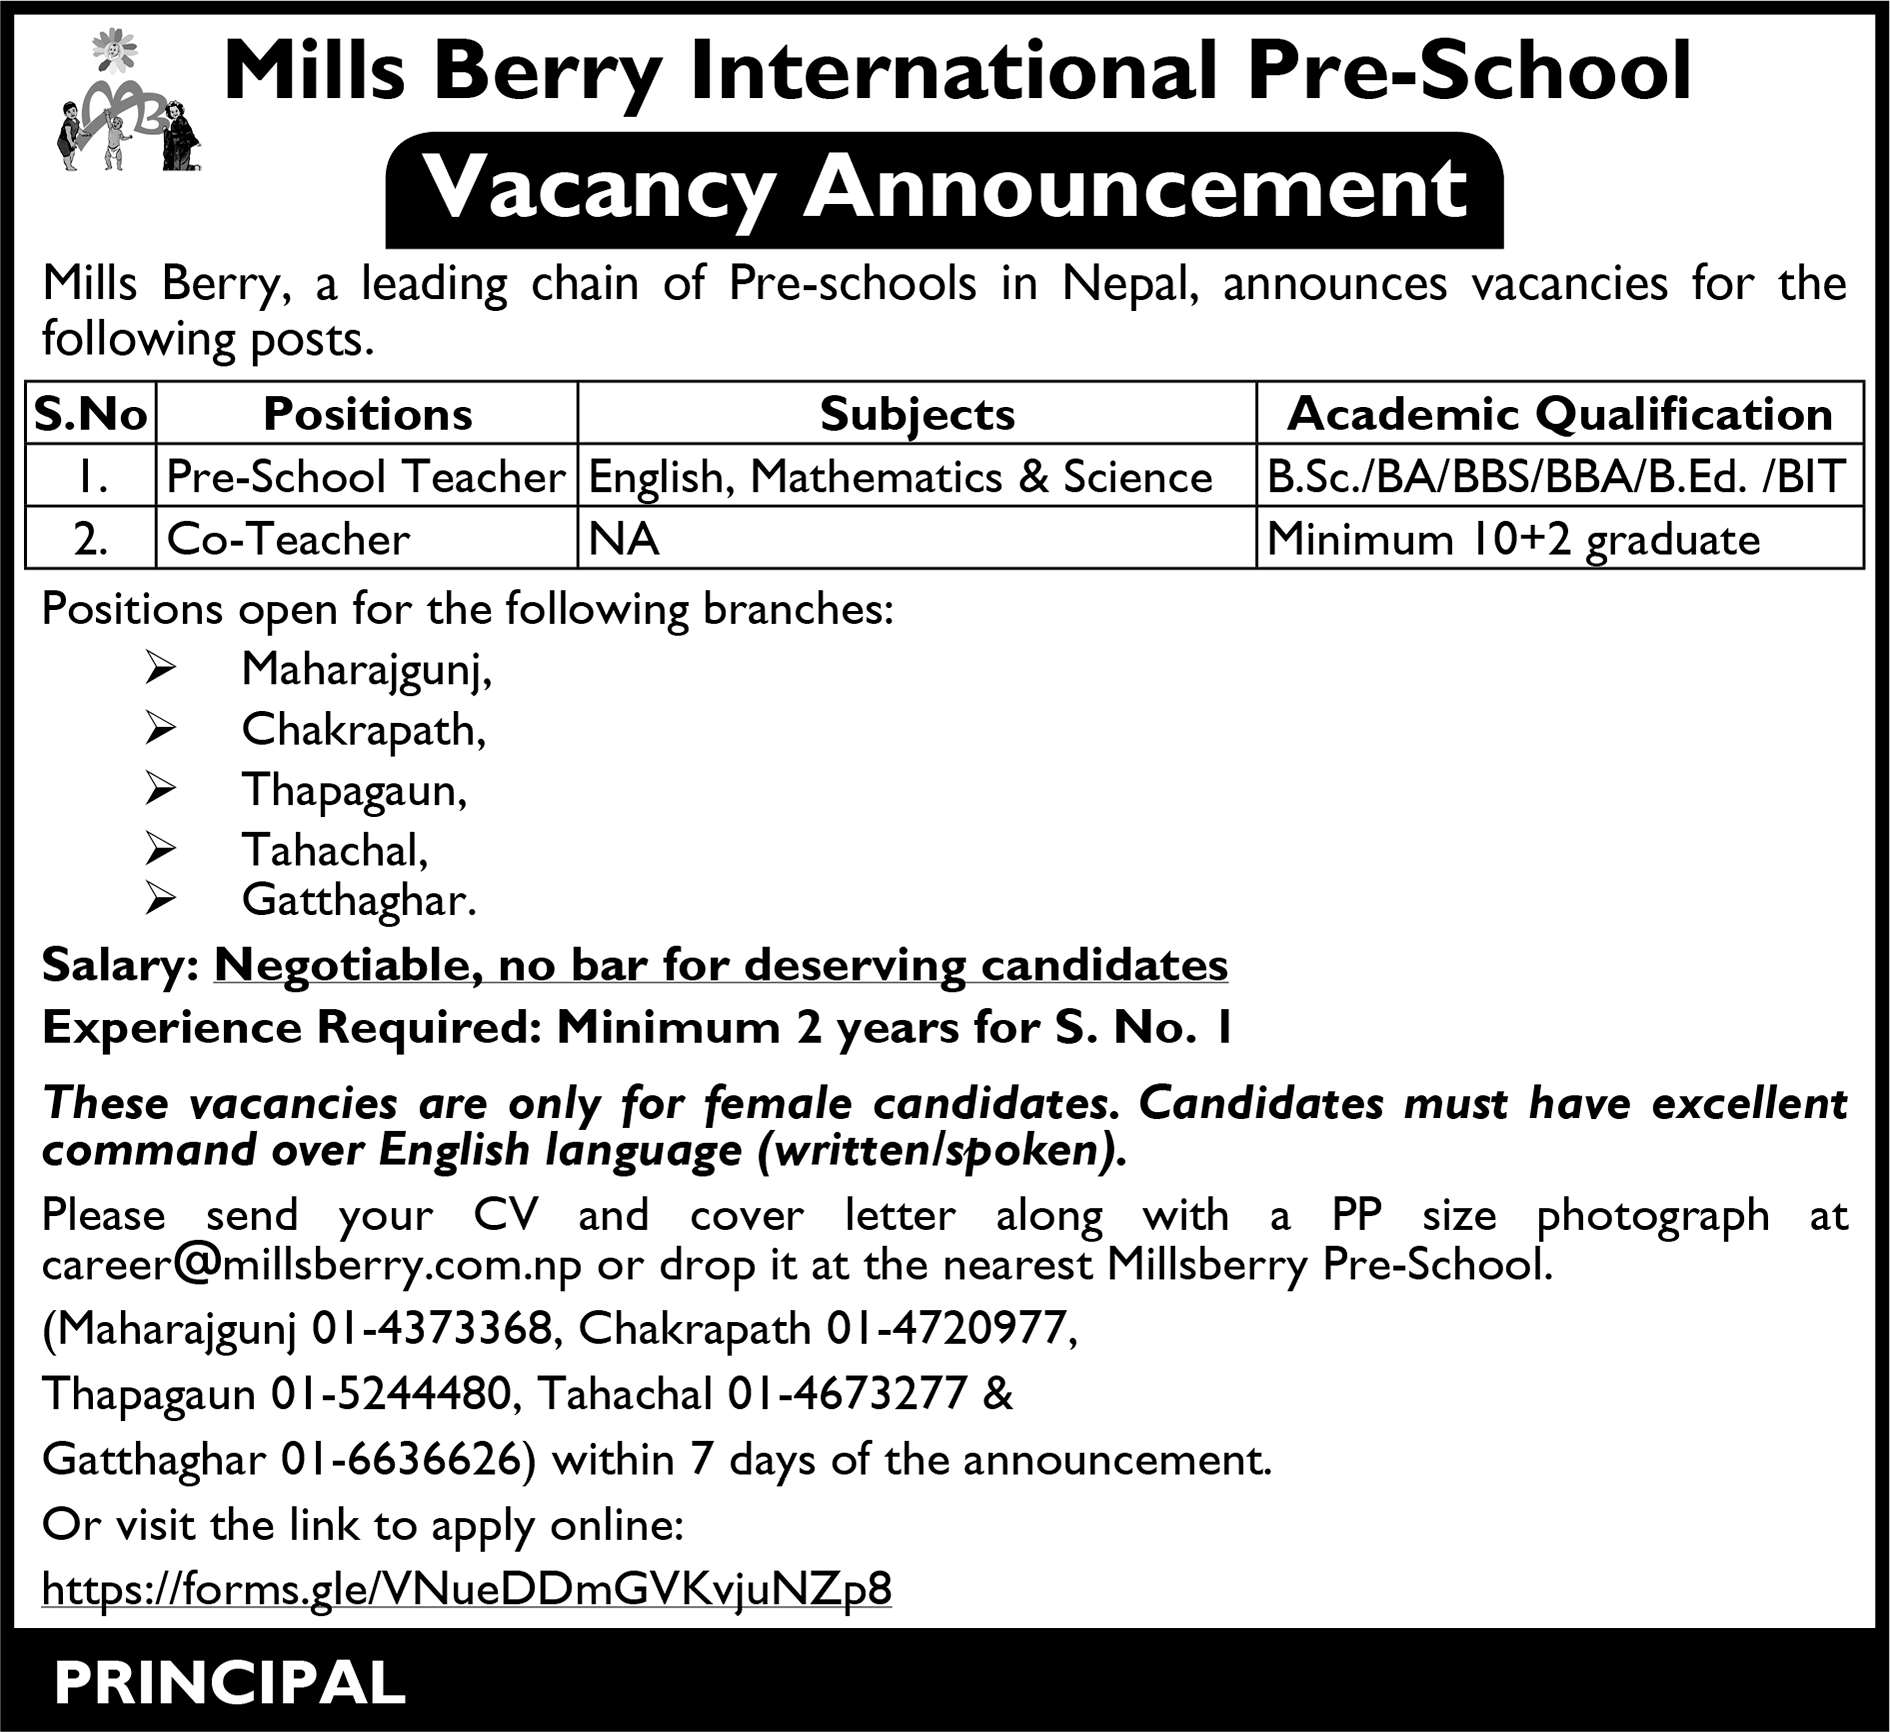 mills berry announces vacancy